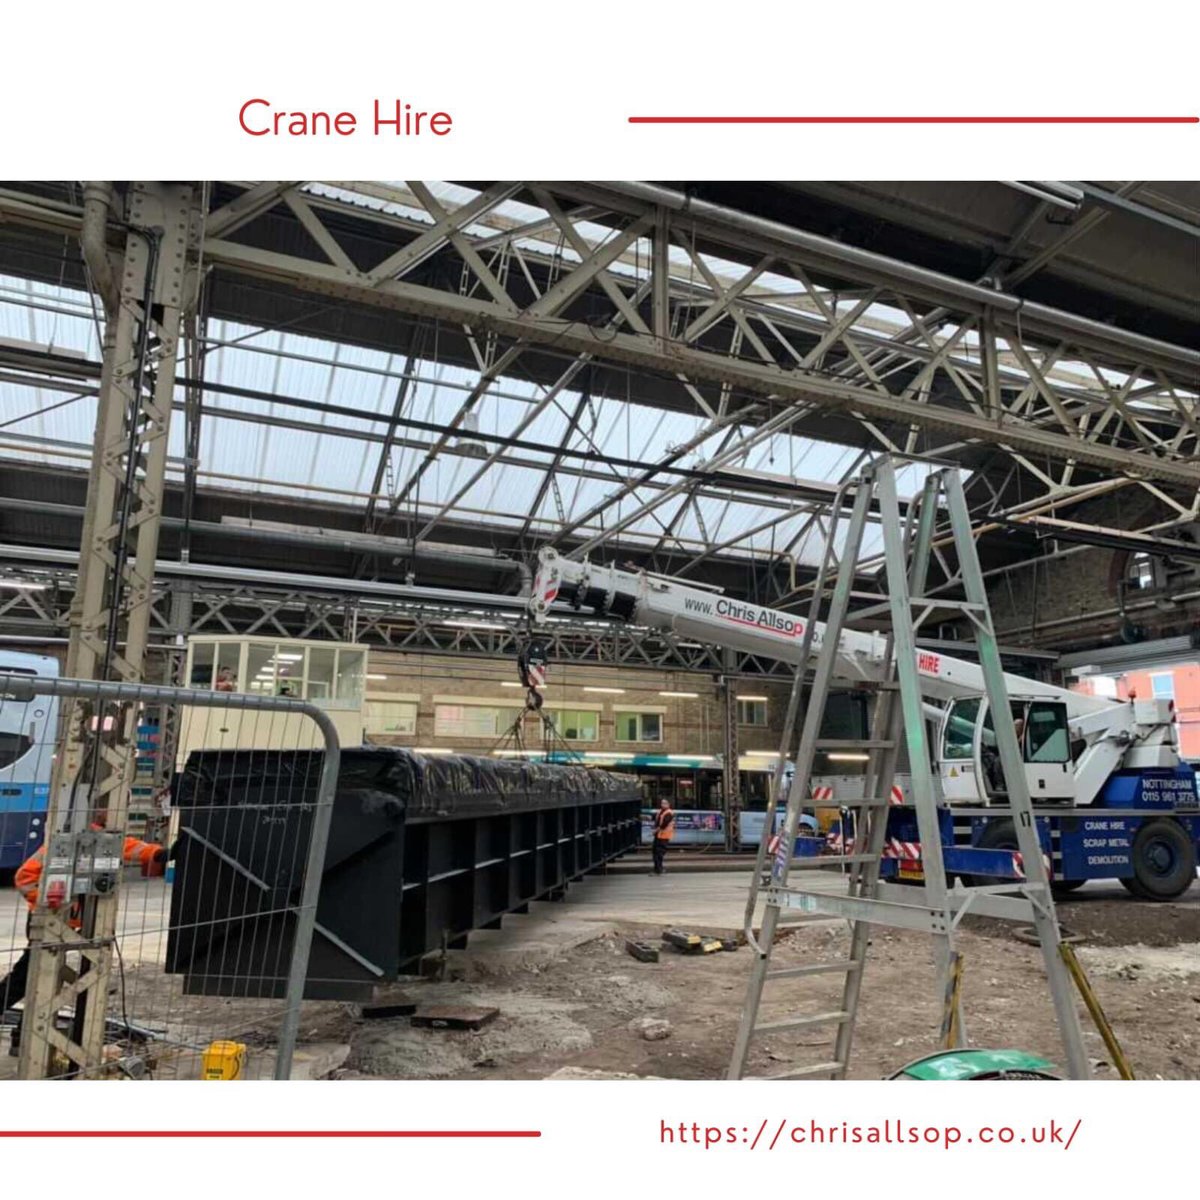 ➡️ Established since 1986  
🌐 chrisallsop.co.uk

#chrisallsop #cranehire #crane #nottingham⠀
#cranehire #cranes #cranerental #lifting #heavylifting #nottingham #cranesupplier #equipmentrental #machineryrental